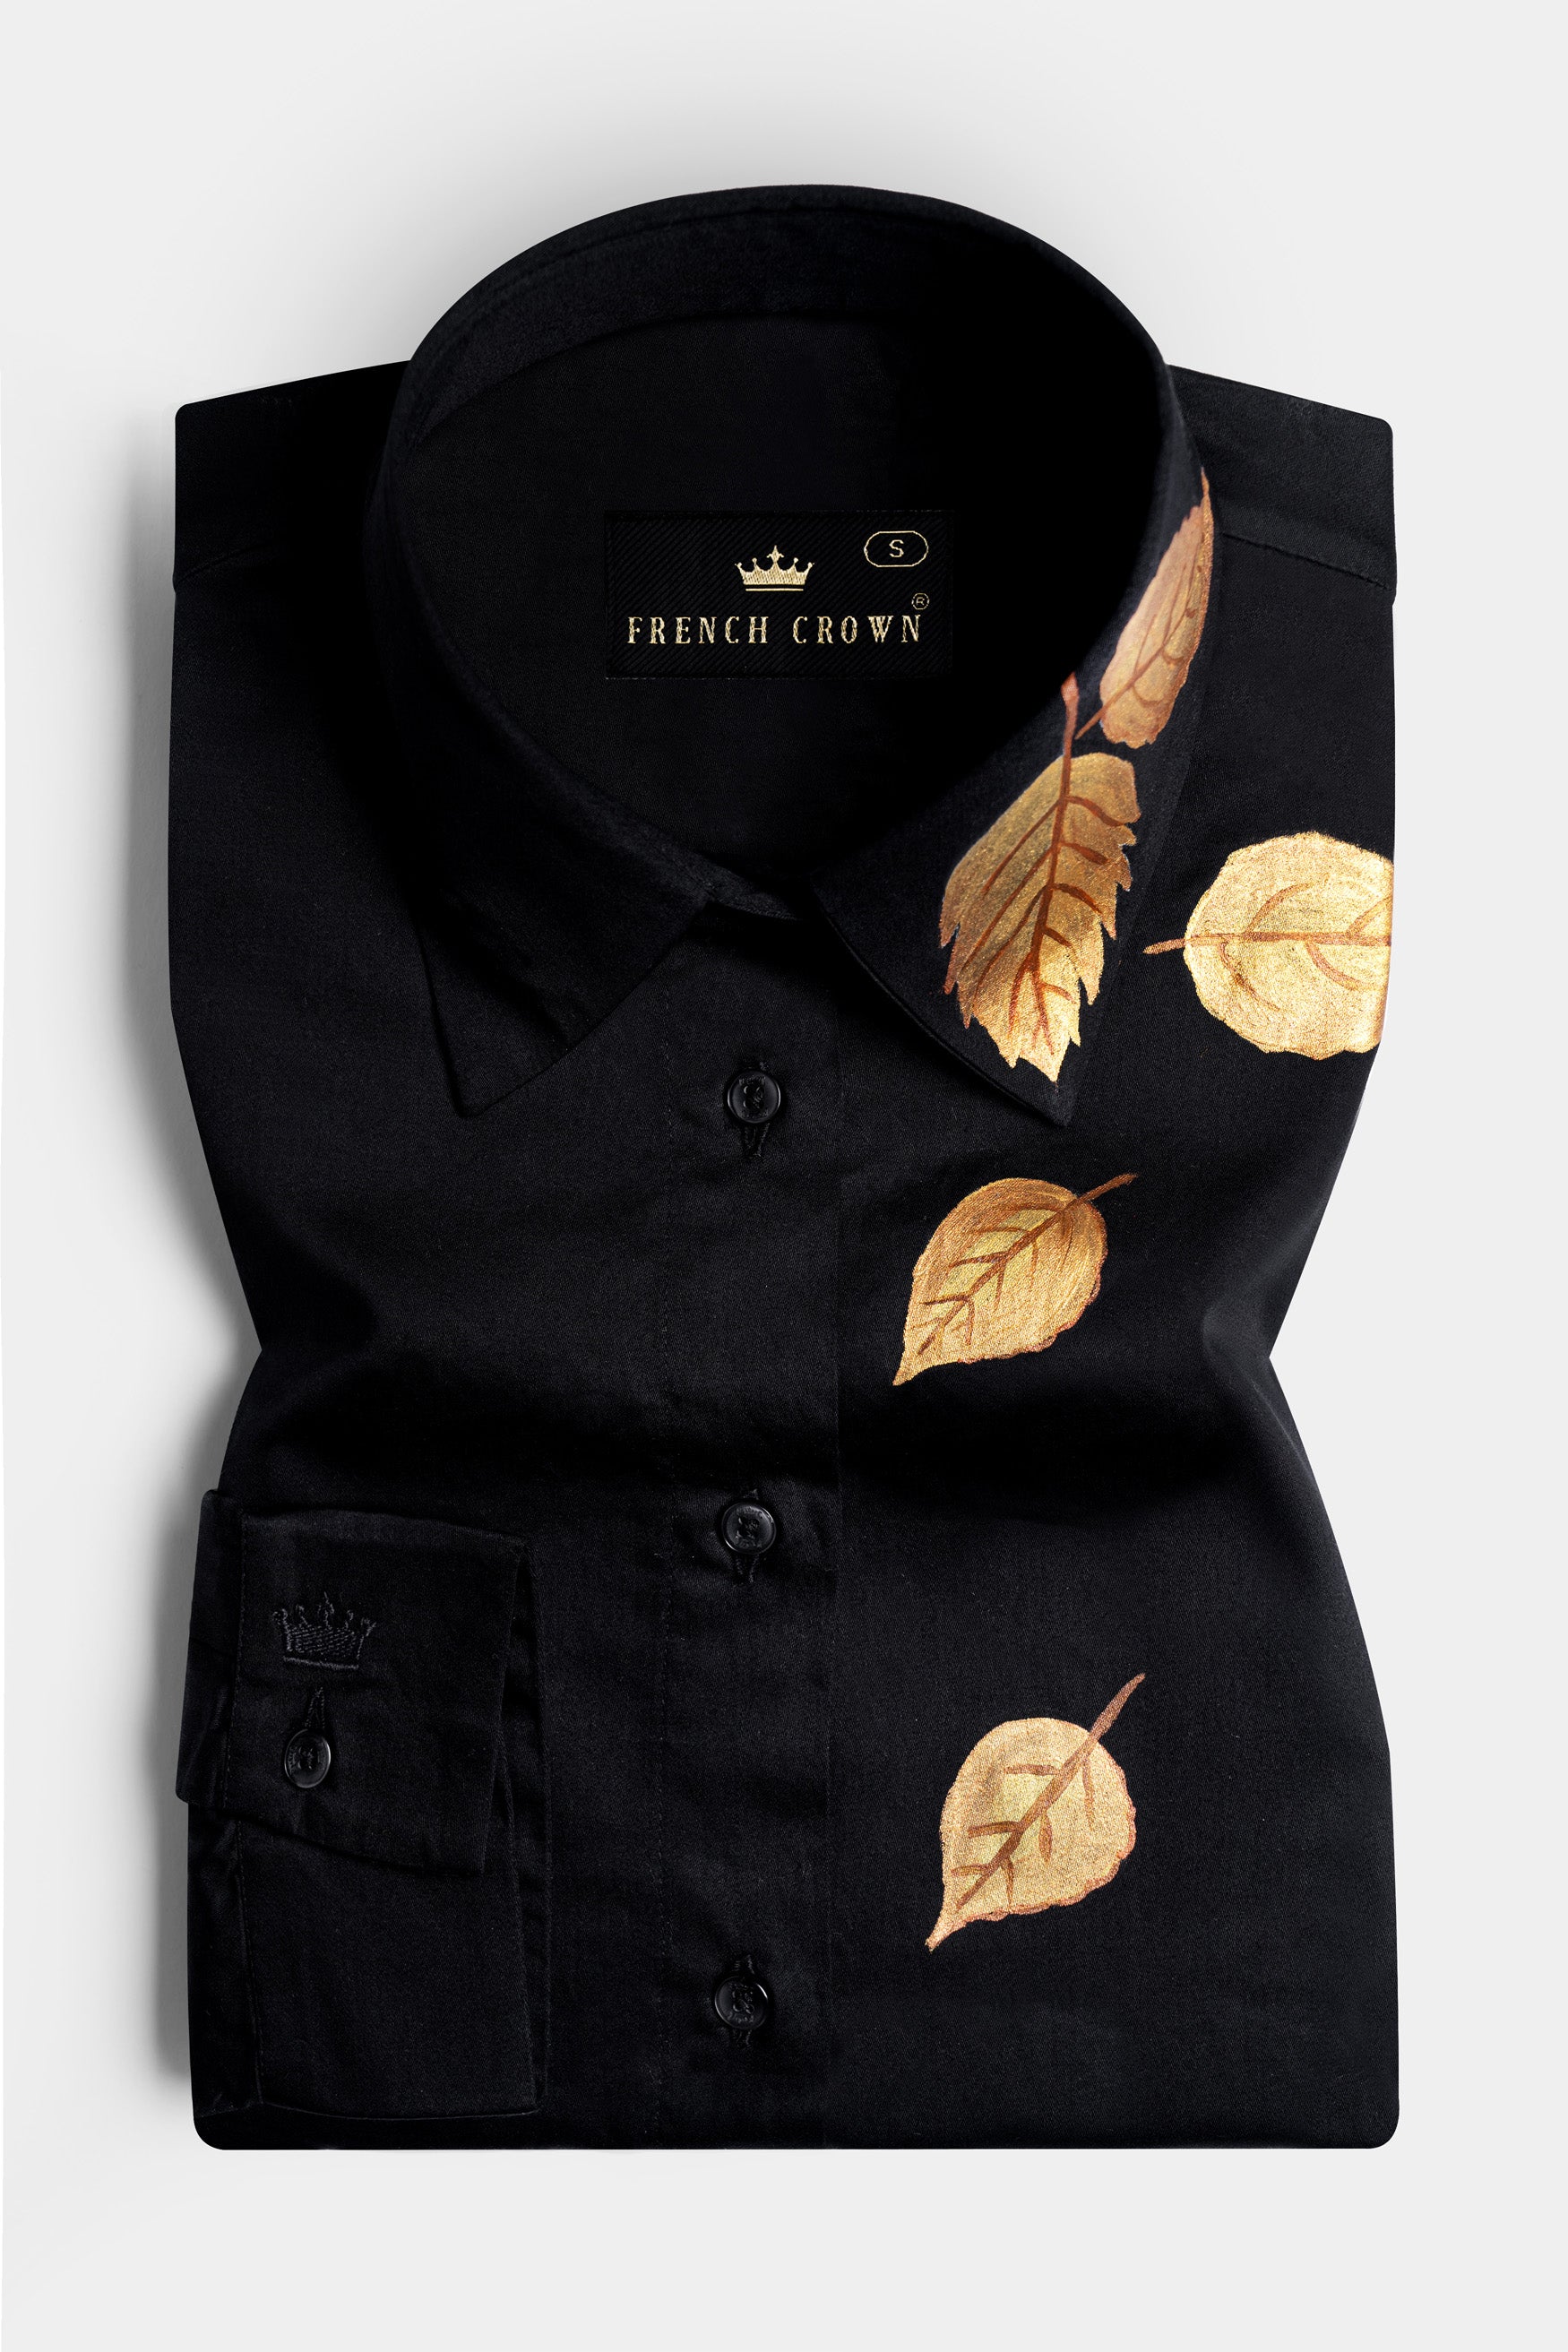 Jade Black Leaves Hand Painted Premium Cotton Tie Up Style Designer Shirt